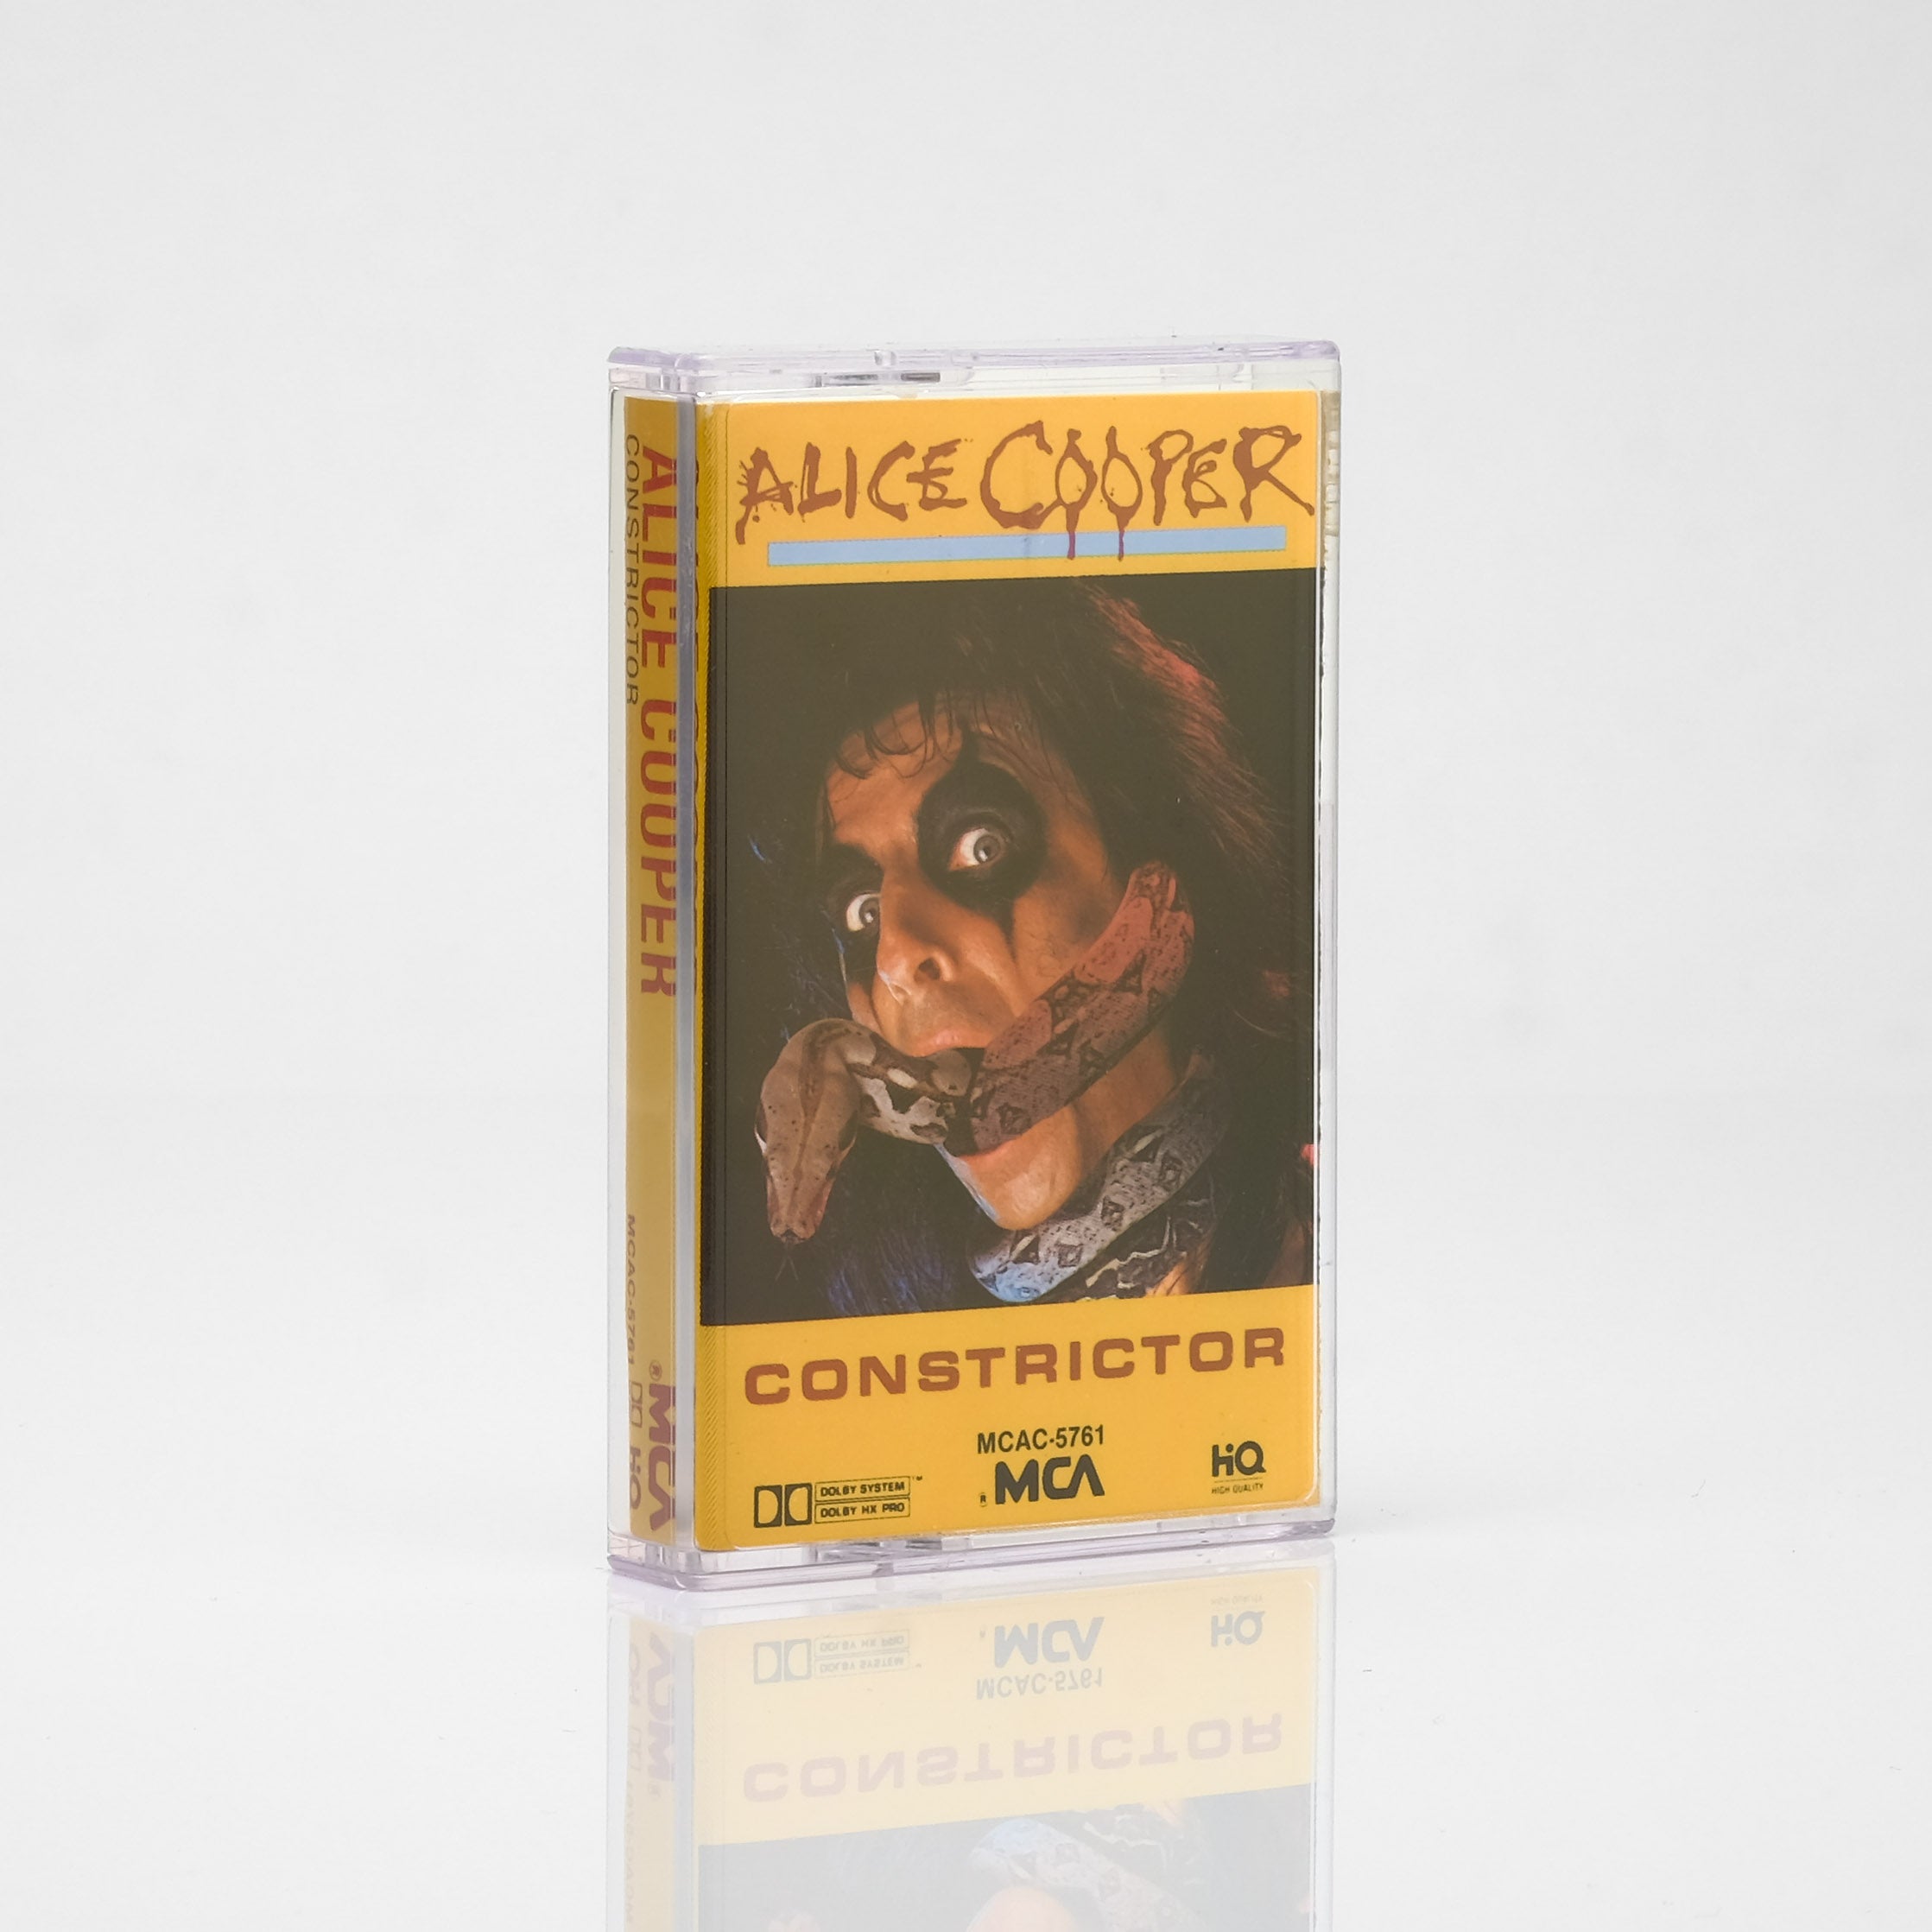 Alice Cooper - Constrictor Cassette Tape